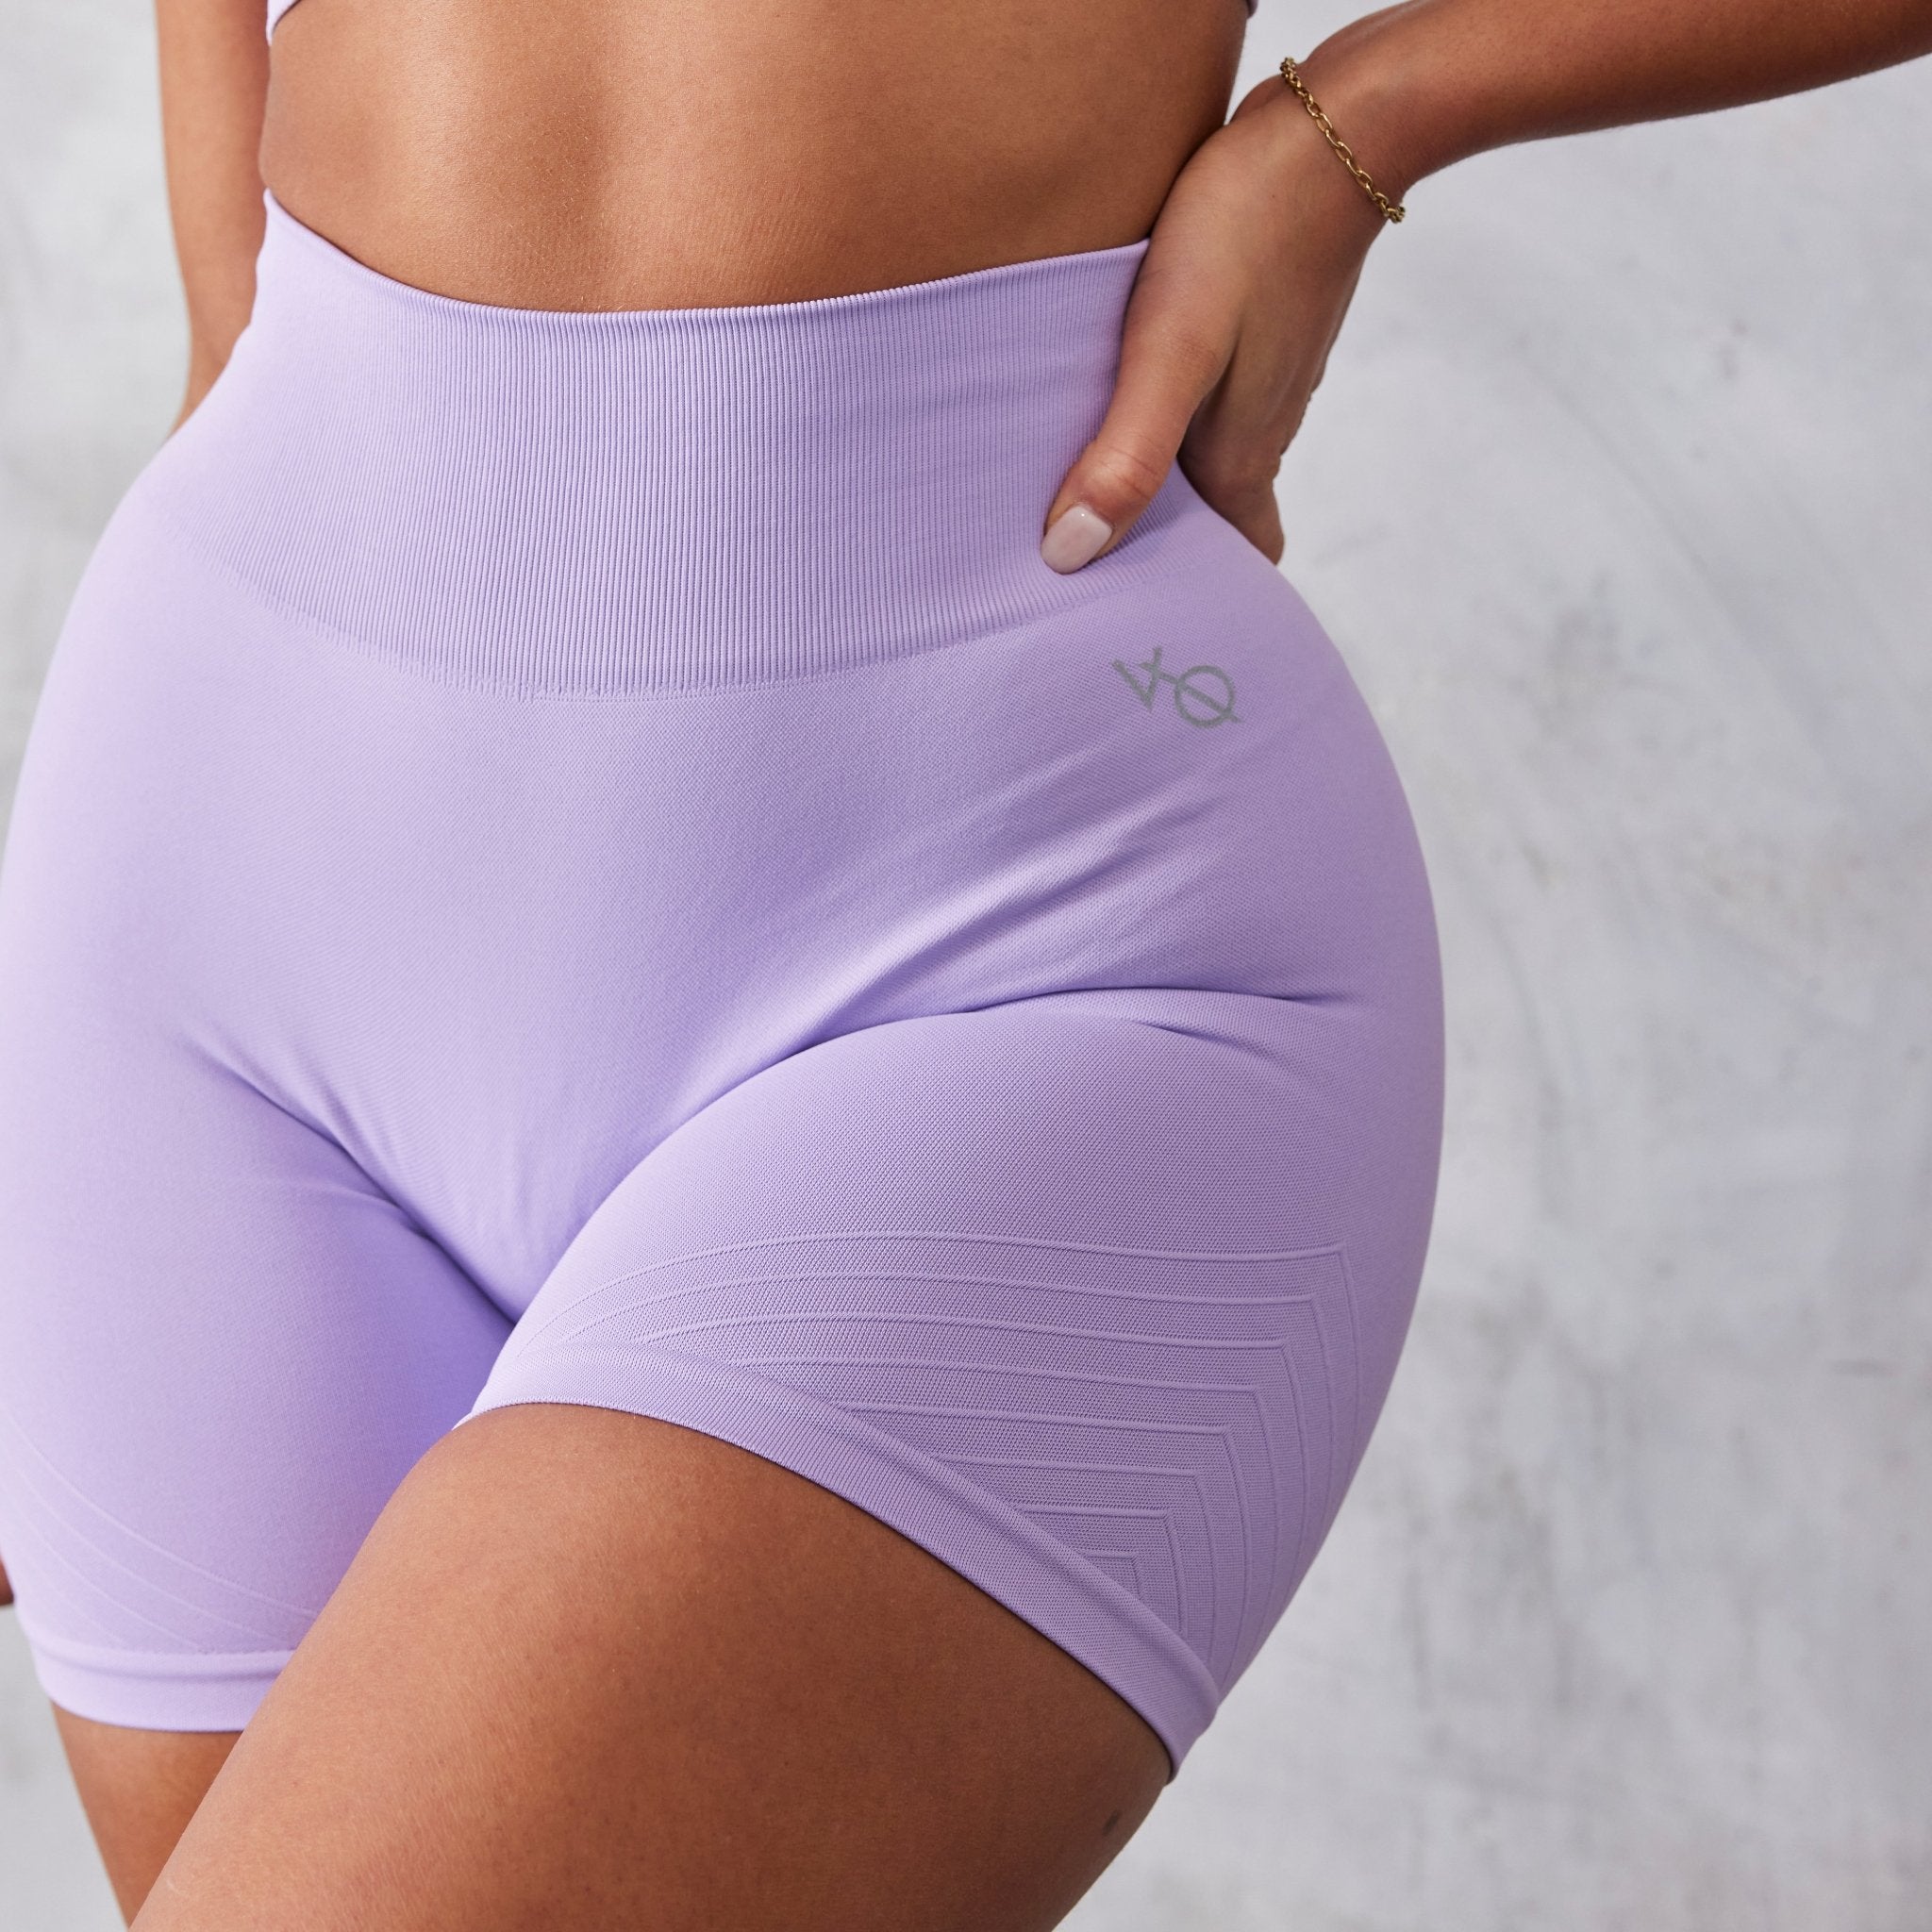 Vanquish Neutral V2 Seamless Lilac Shorts - Vanquish Fitness